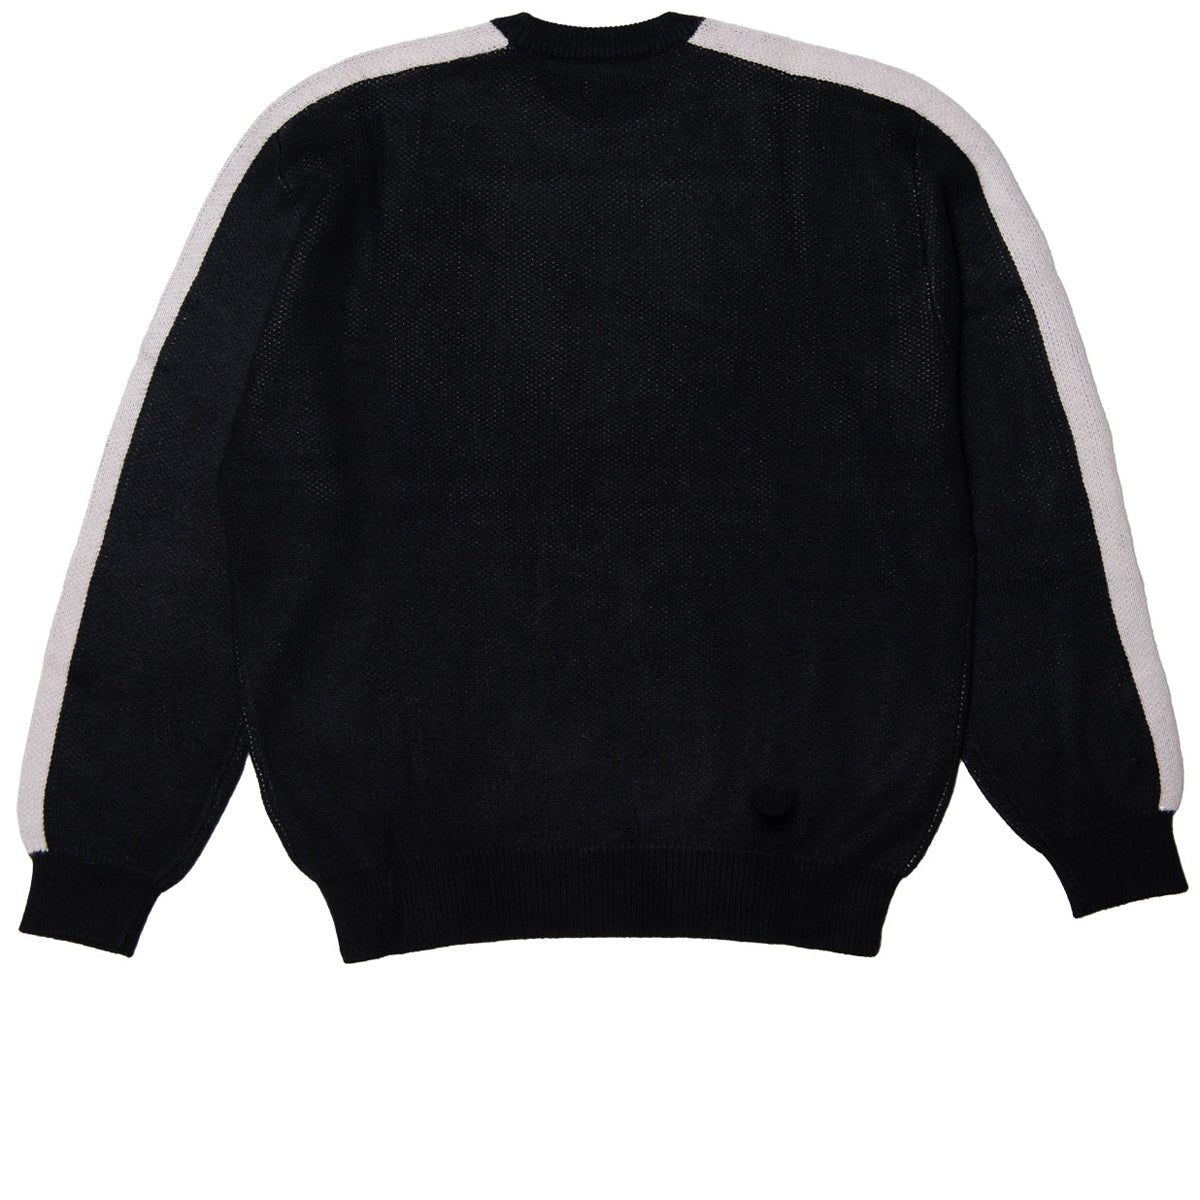 Hoddle Warped Logo Knit Shirt - Black/Grey image 3